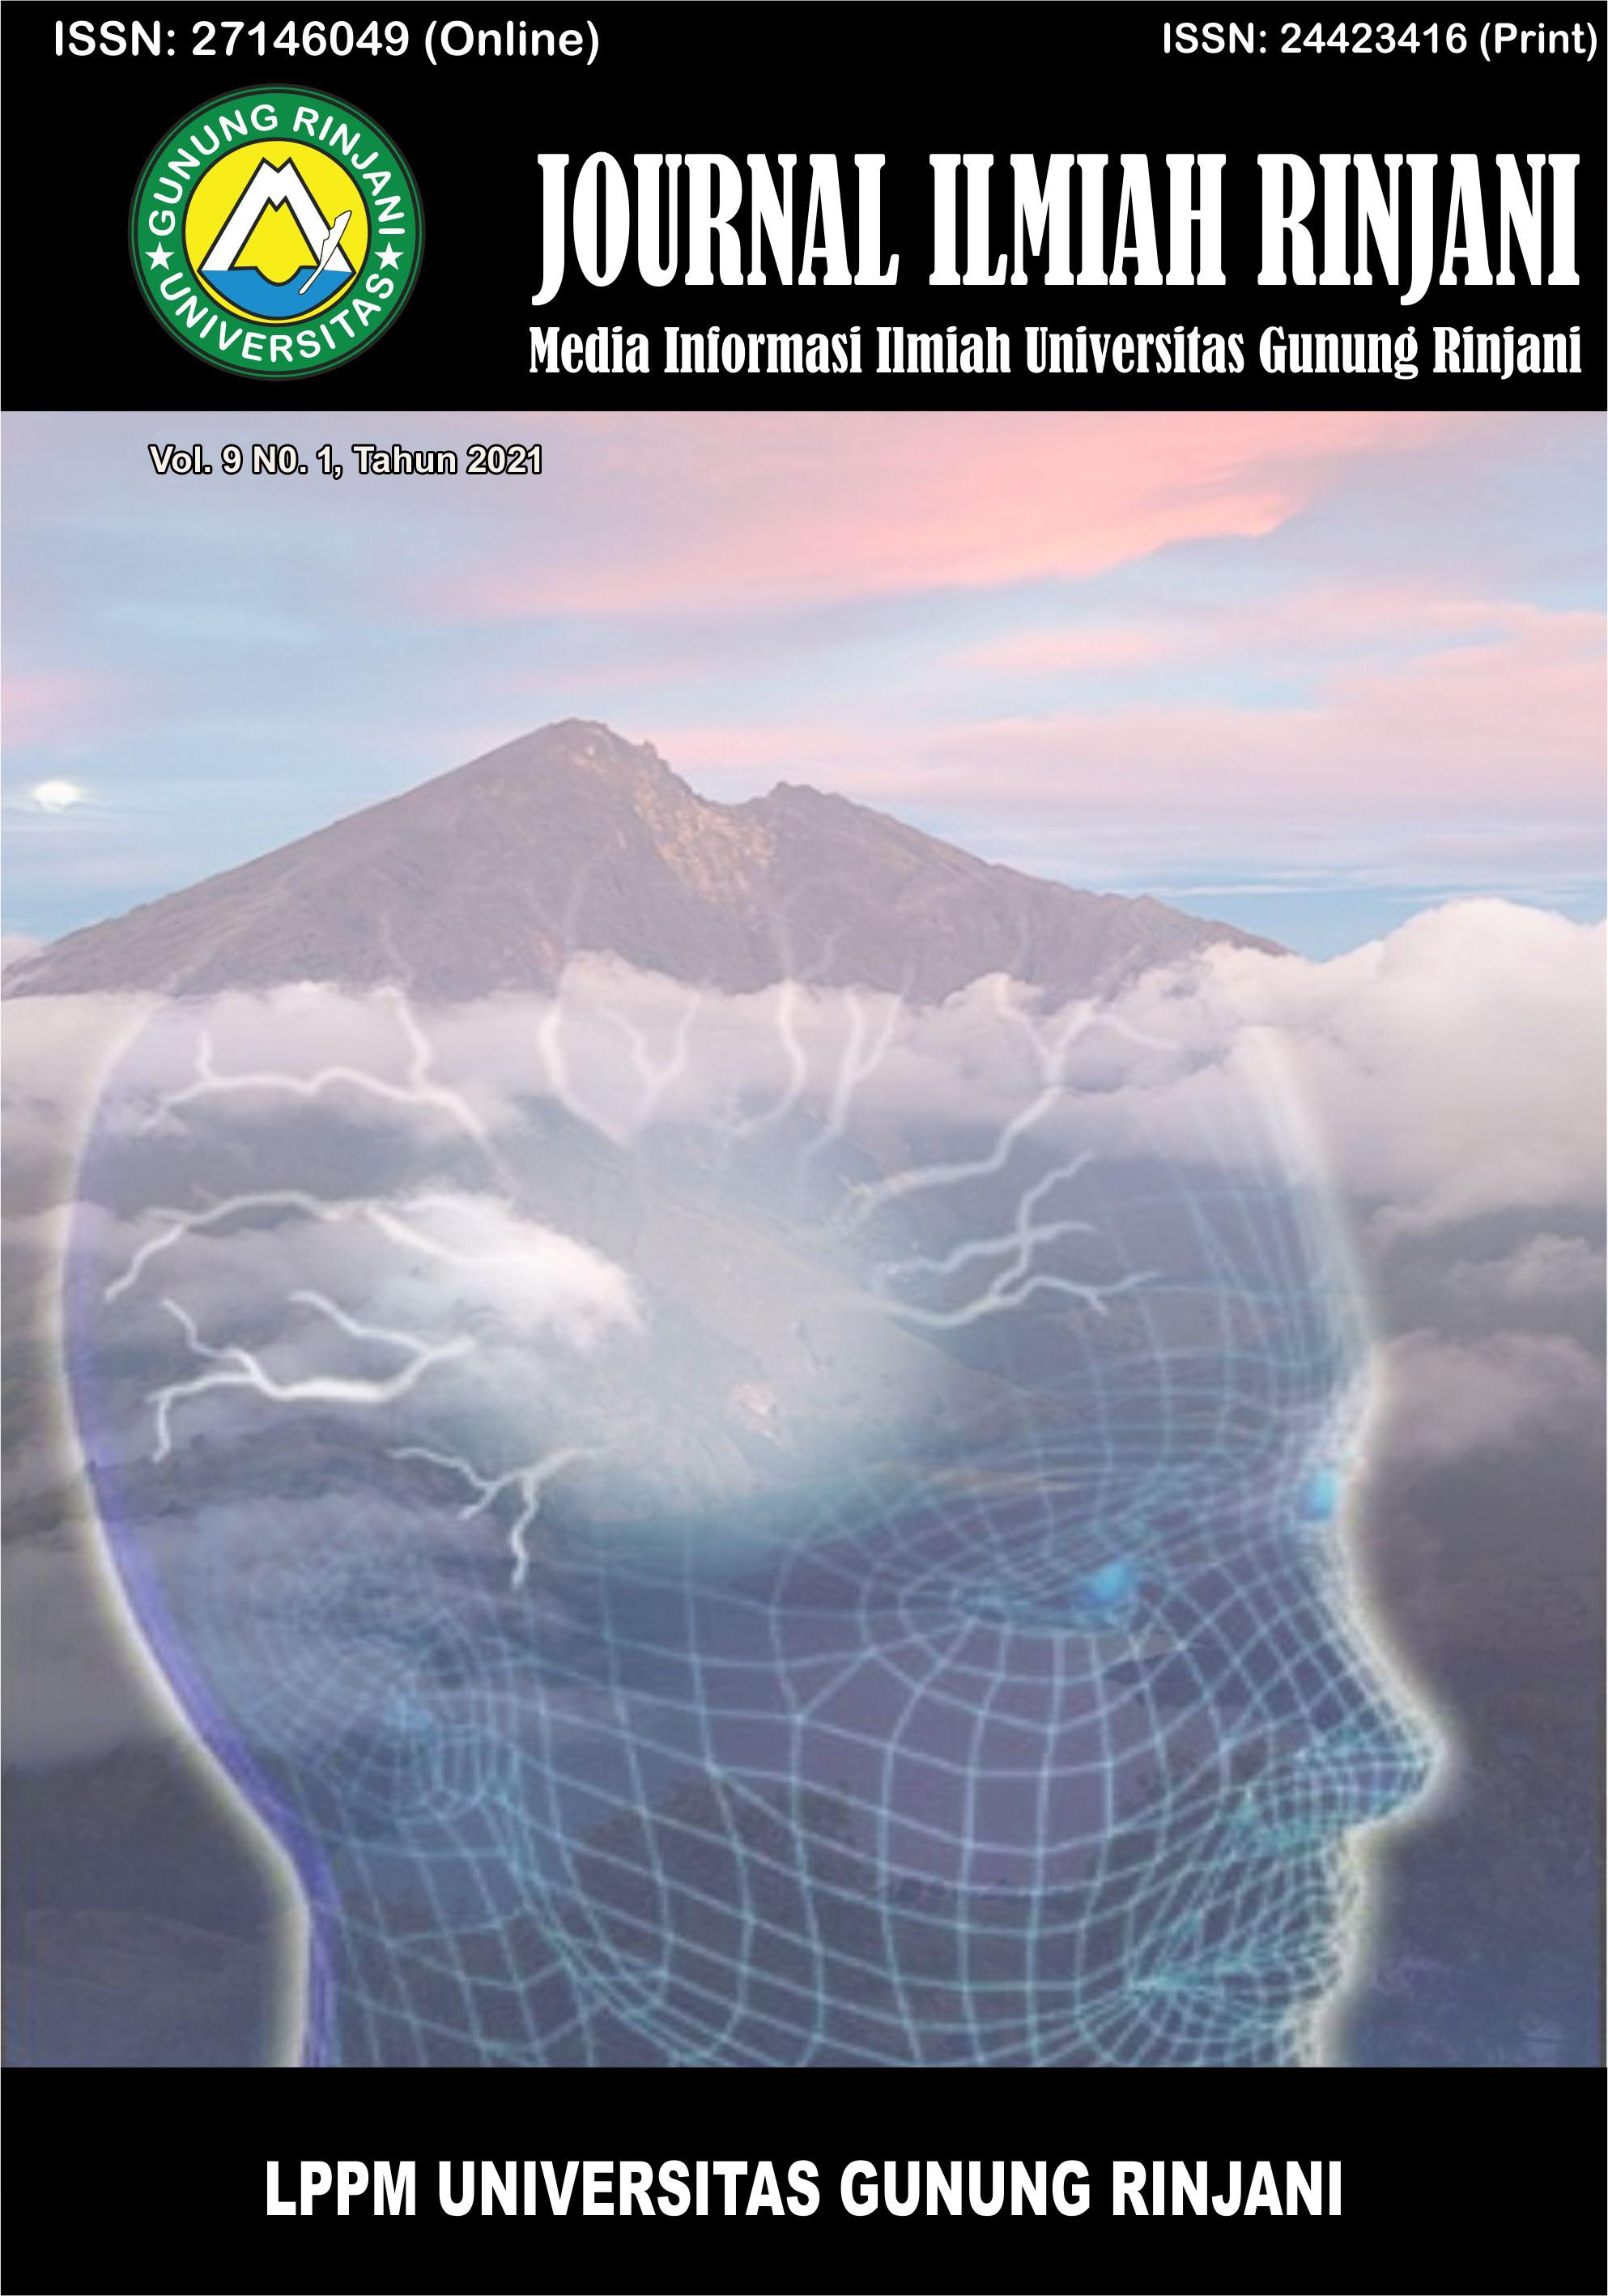  View Vol. 9 No. 1 (2021): Journal Ilmiah Rinjani: Media Informasi Ilmiah Universitas Gunung Rinjani 